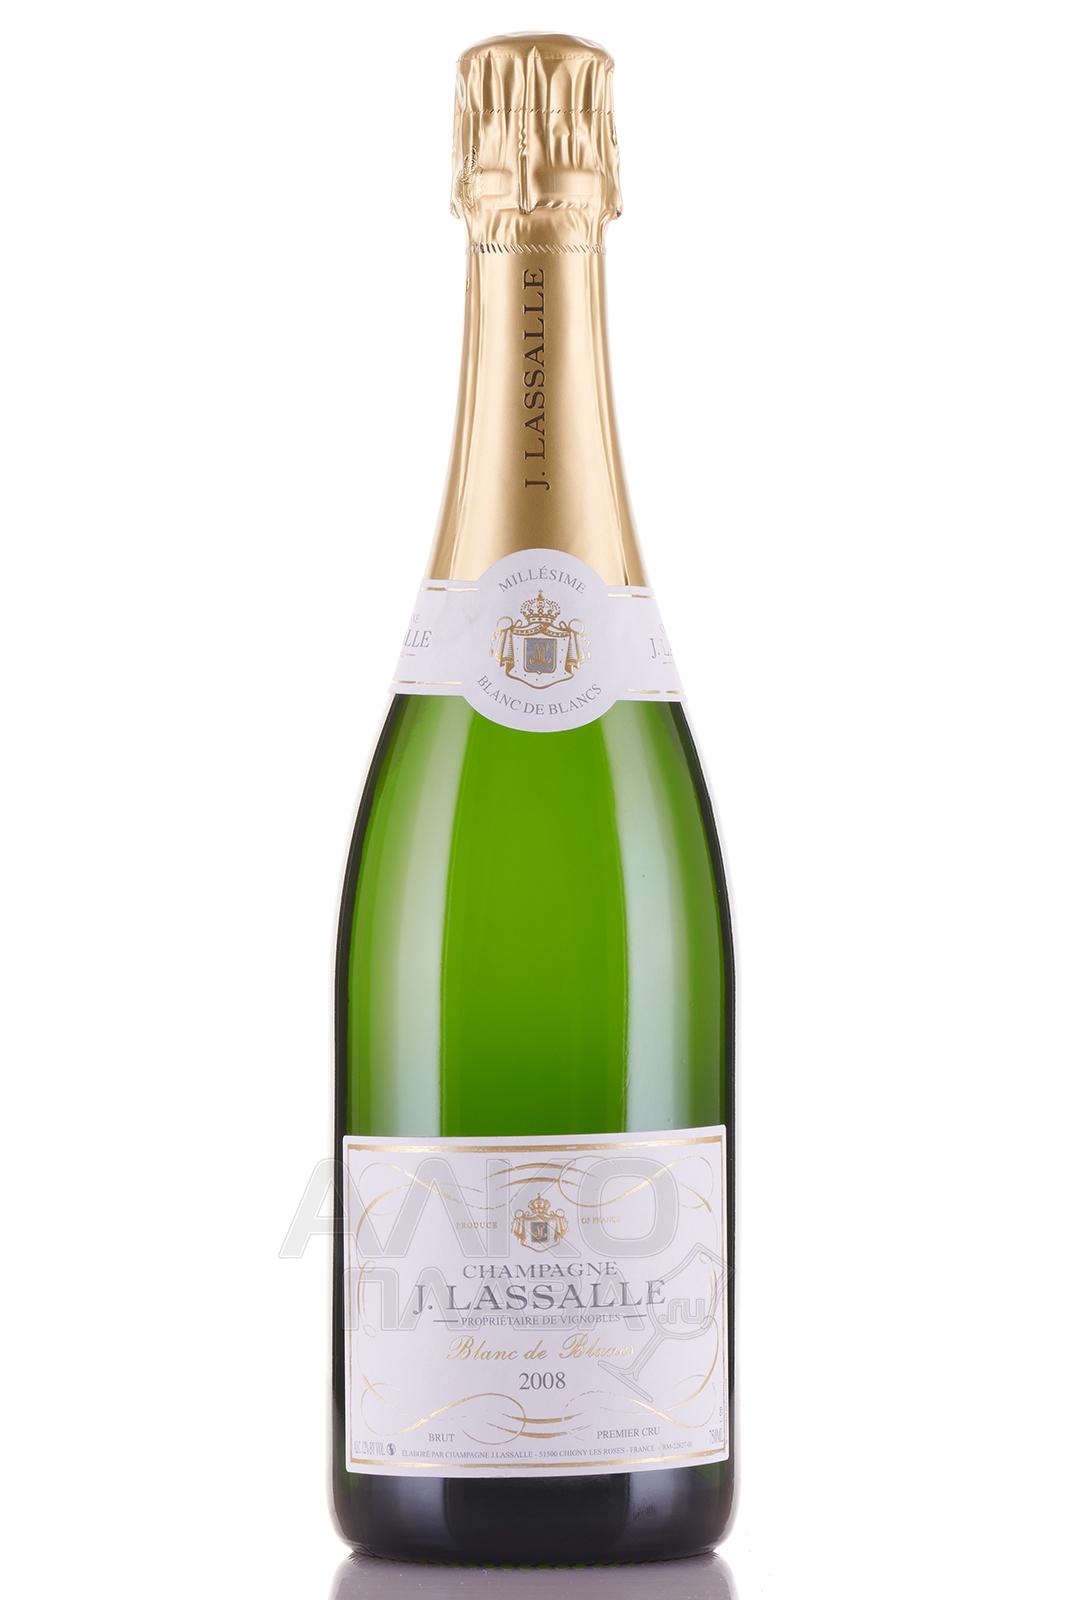 J. Lassalle Premier Cru Chigny-Les-Roses Blanc de Blancs 2008 - шампанское Ж.Лассаль Премье Крю Шини-ле-Роз Блан де Блан 0.75 л